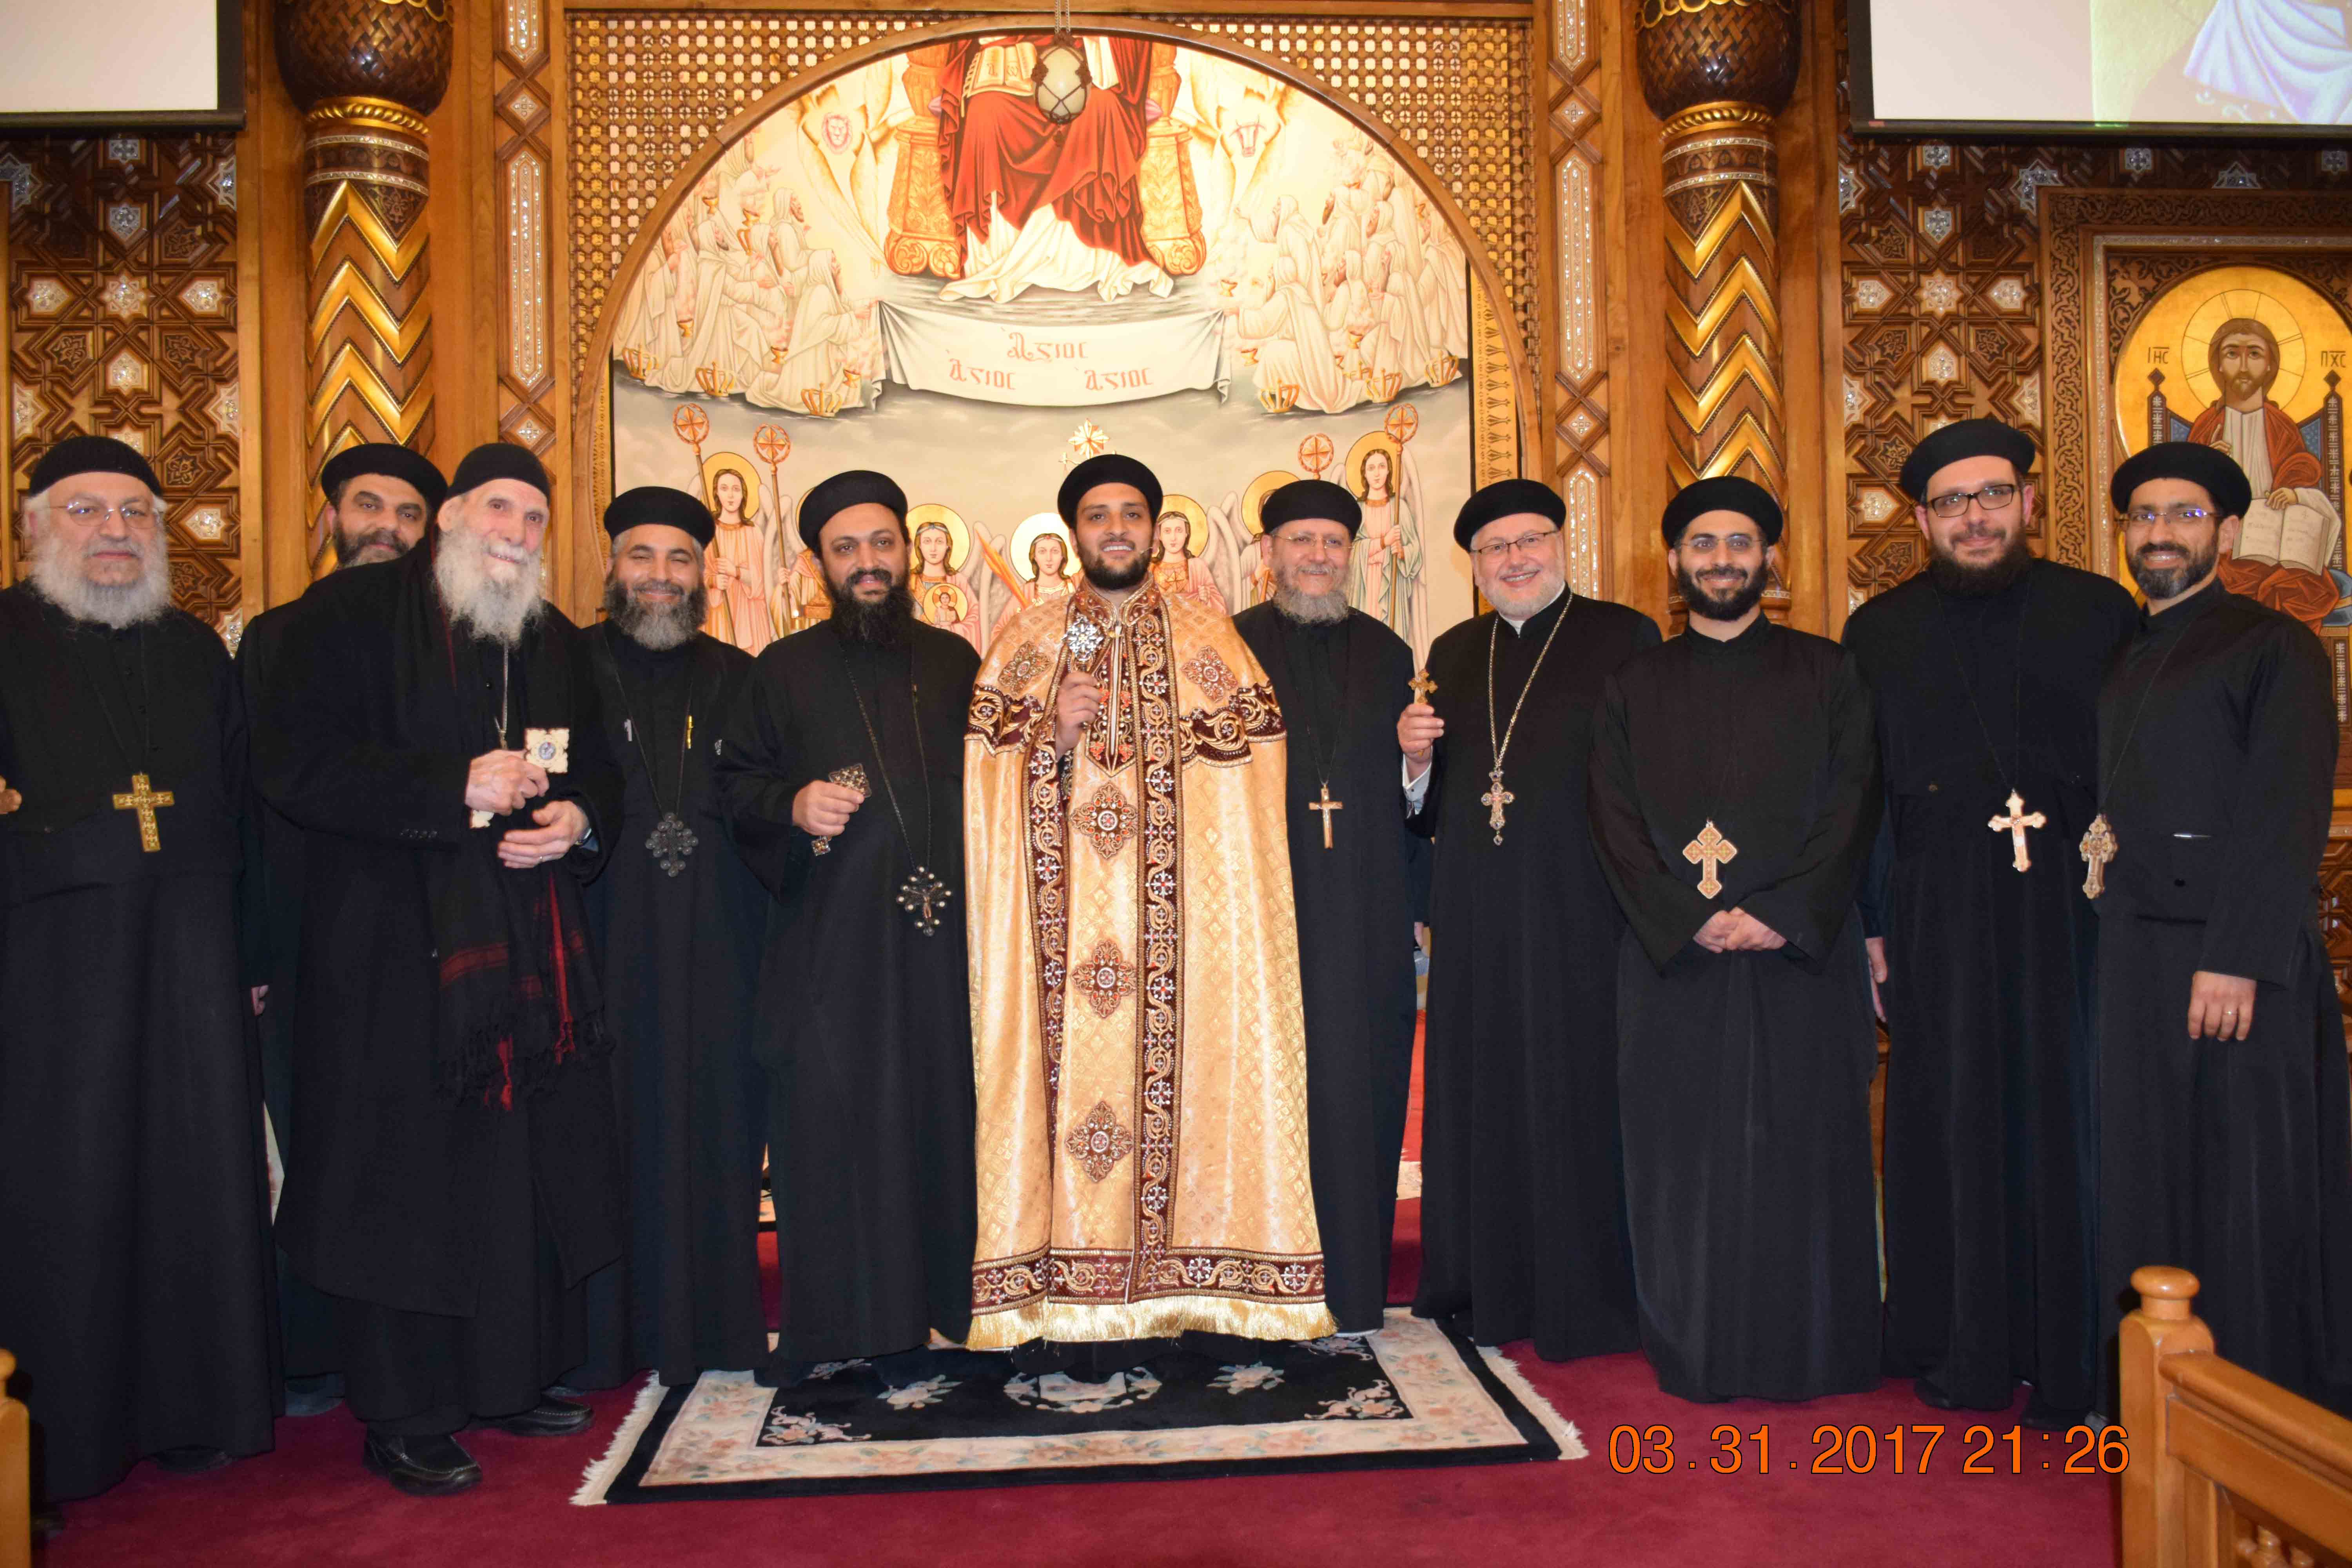 St. Mary's Coptic Orthodox Church